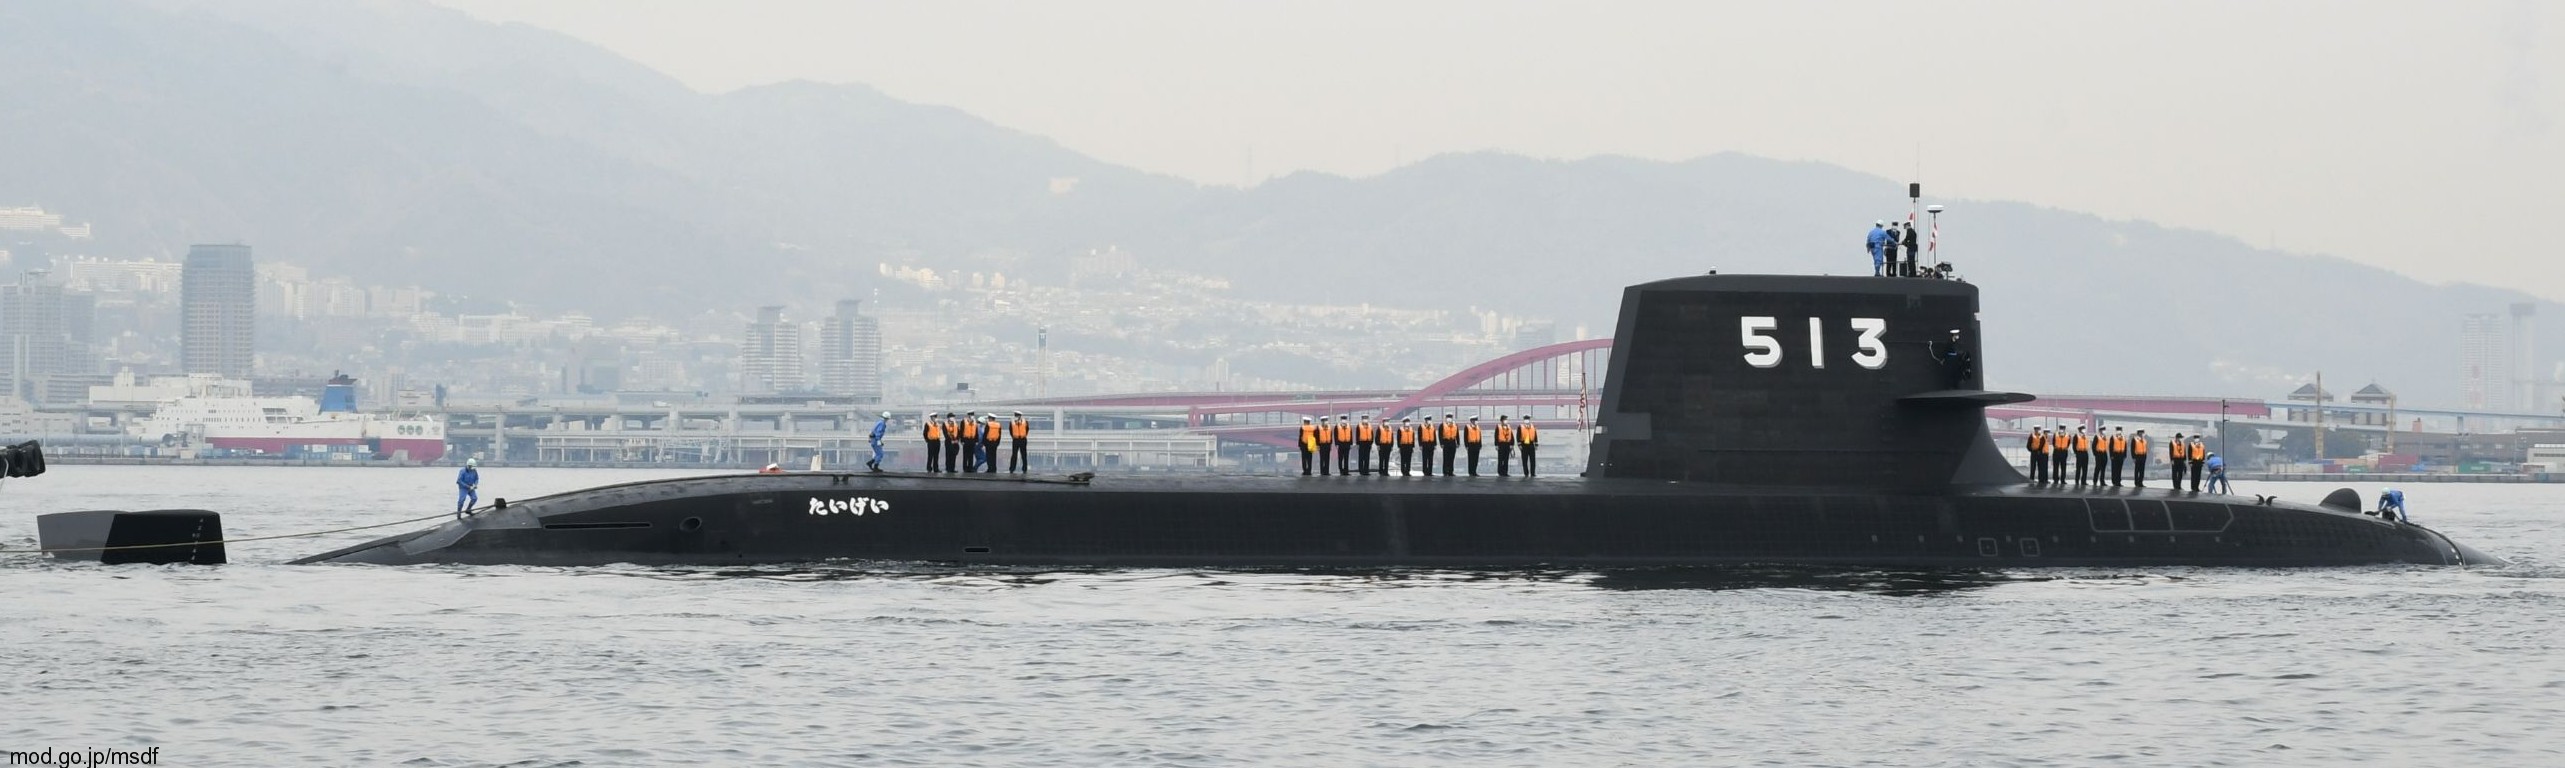 ss-513 js taigei 29ss class attack submarine ssk aip japan maritime self defense force jmsdf 12